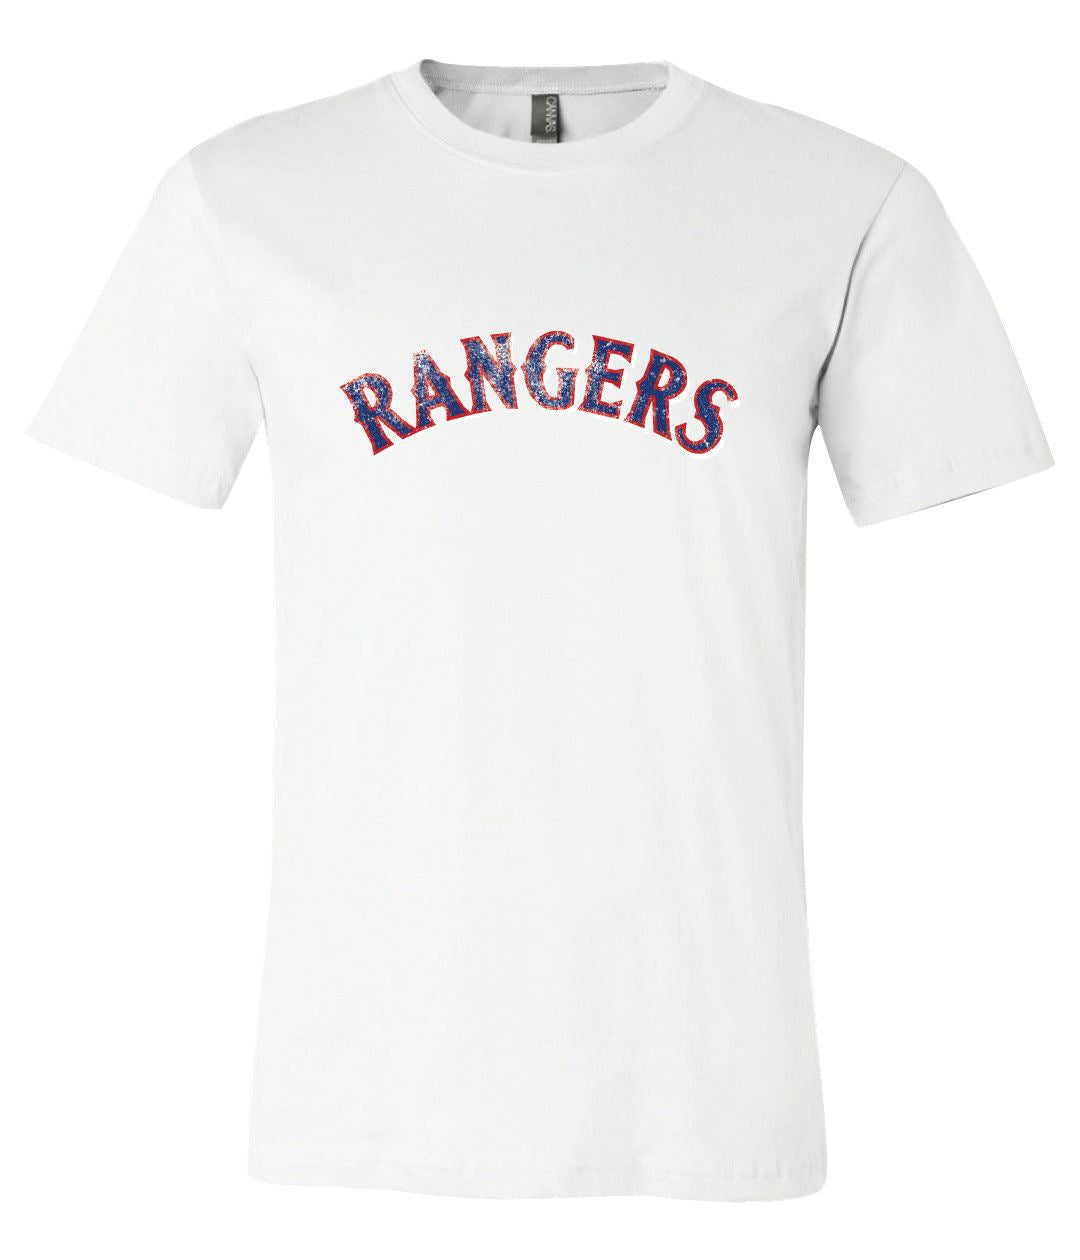 Texas Rangers Shirt Vintage 